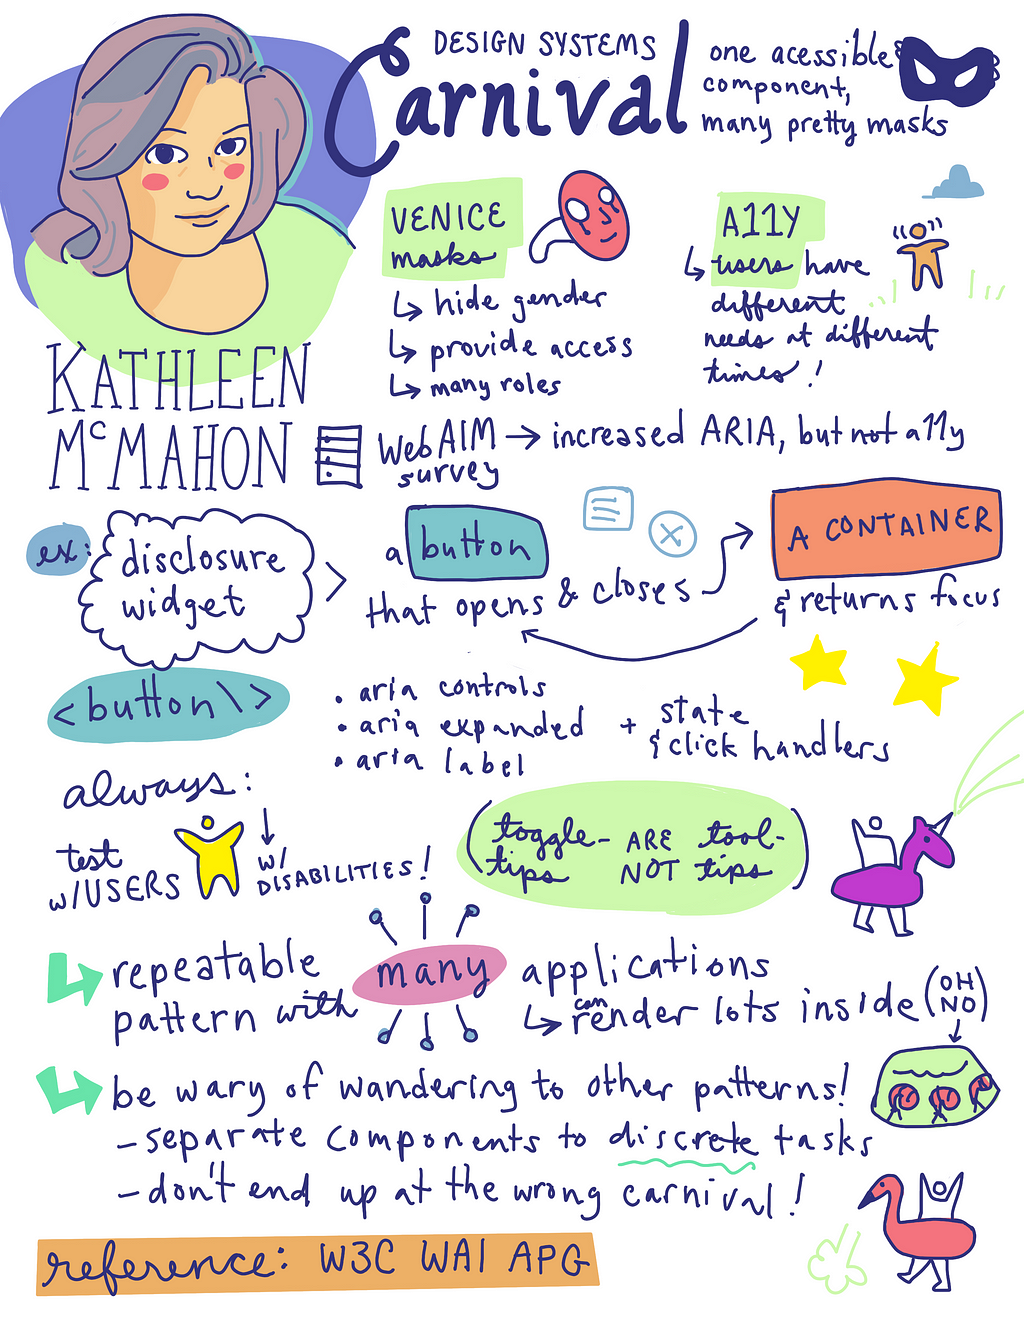 Colorful sketchnotes of Kathleen’s talk